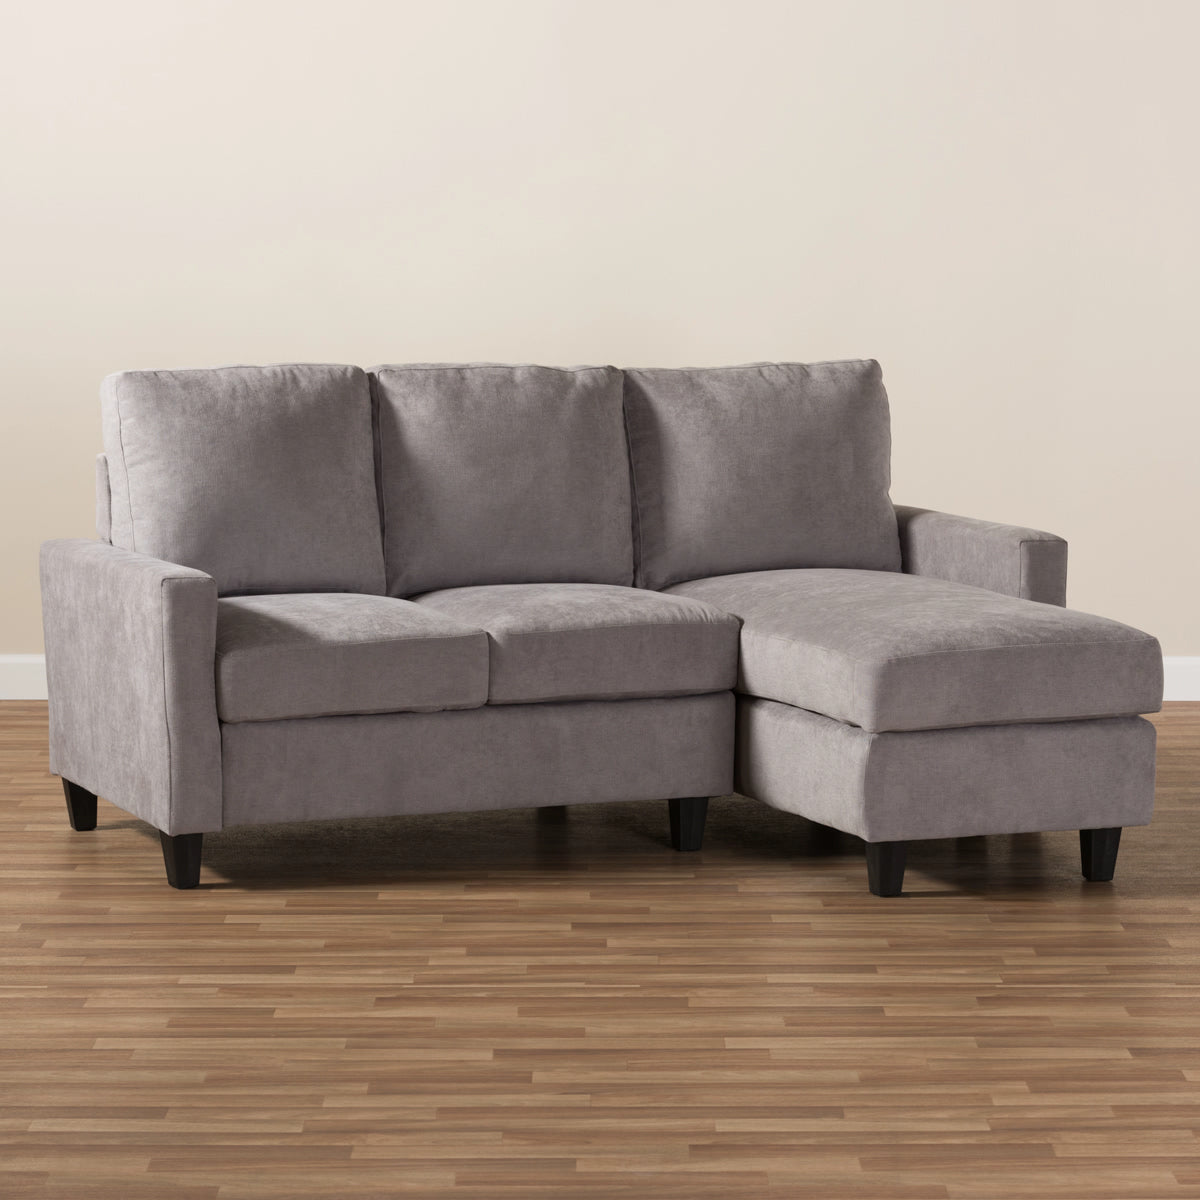 Baxton Studio Greyson Modern And Contemporary Light Grey Fabric Upholstered Reversible Sectional Sofa Baxton Studio-sofas-Minimal And Modern - 6